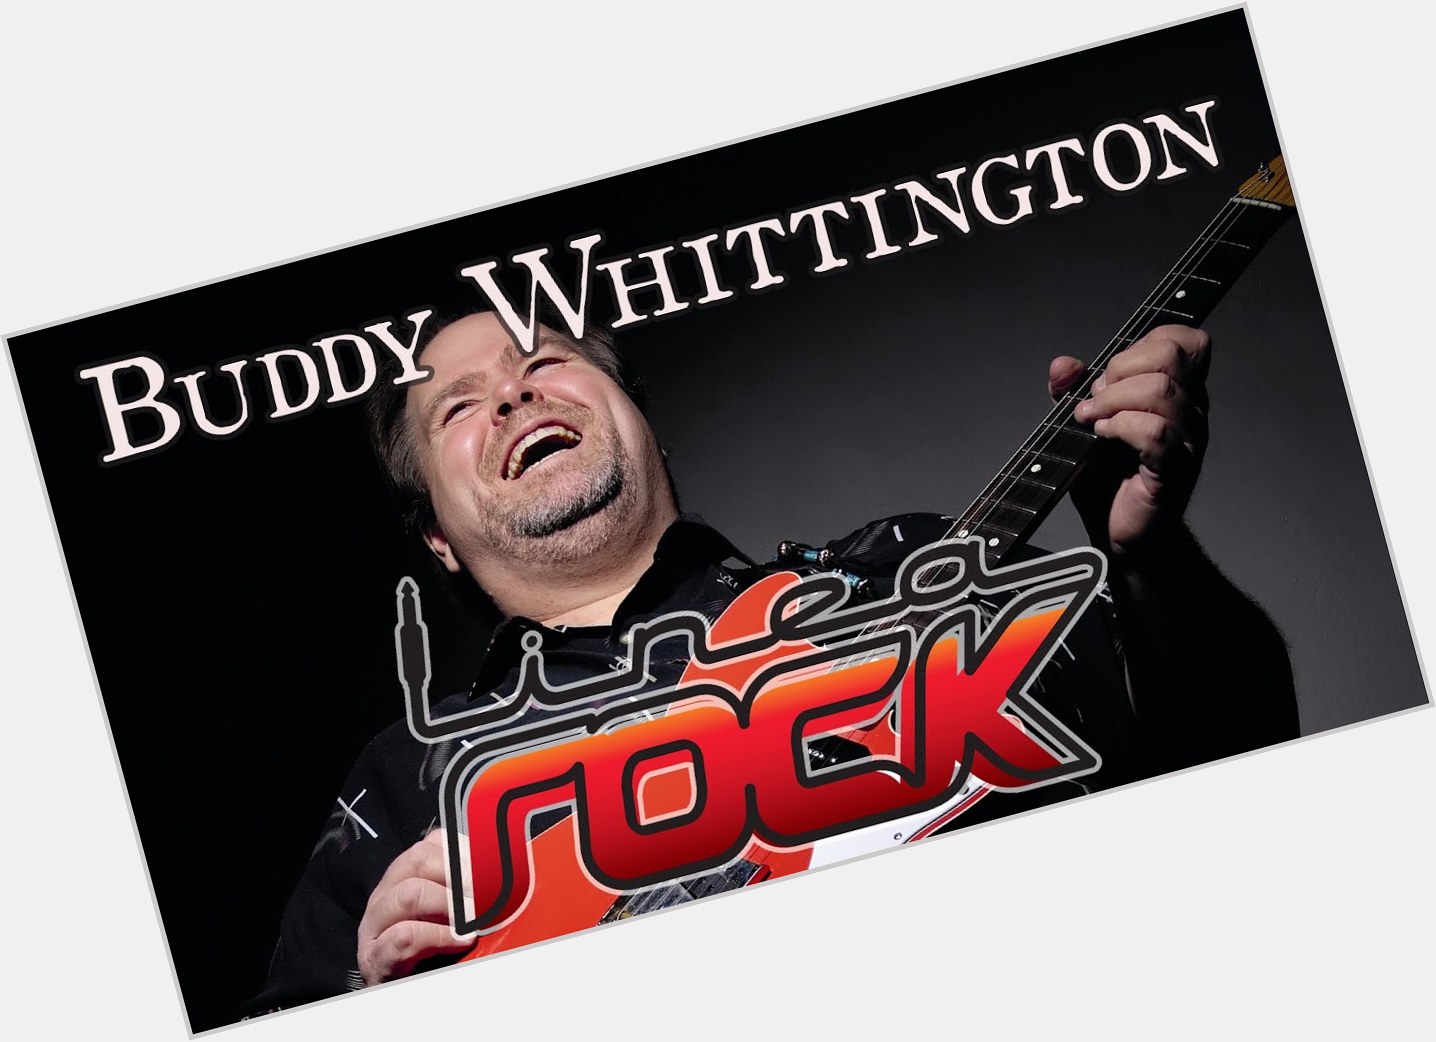 Buddy Whittington dating 2